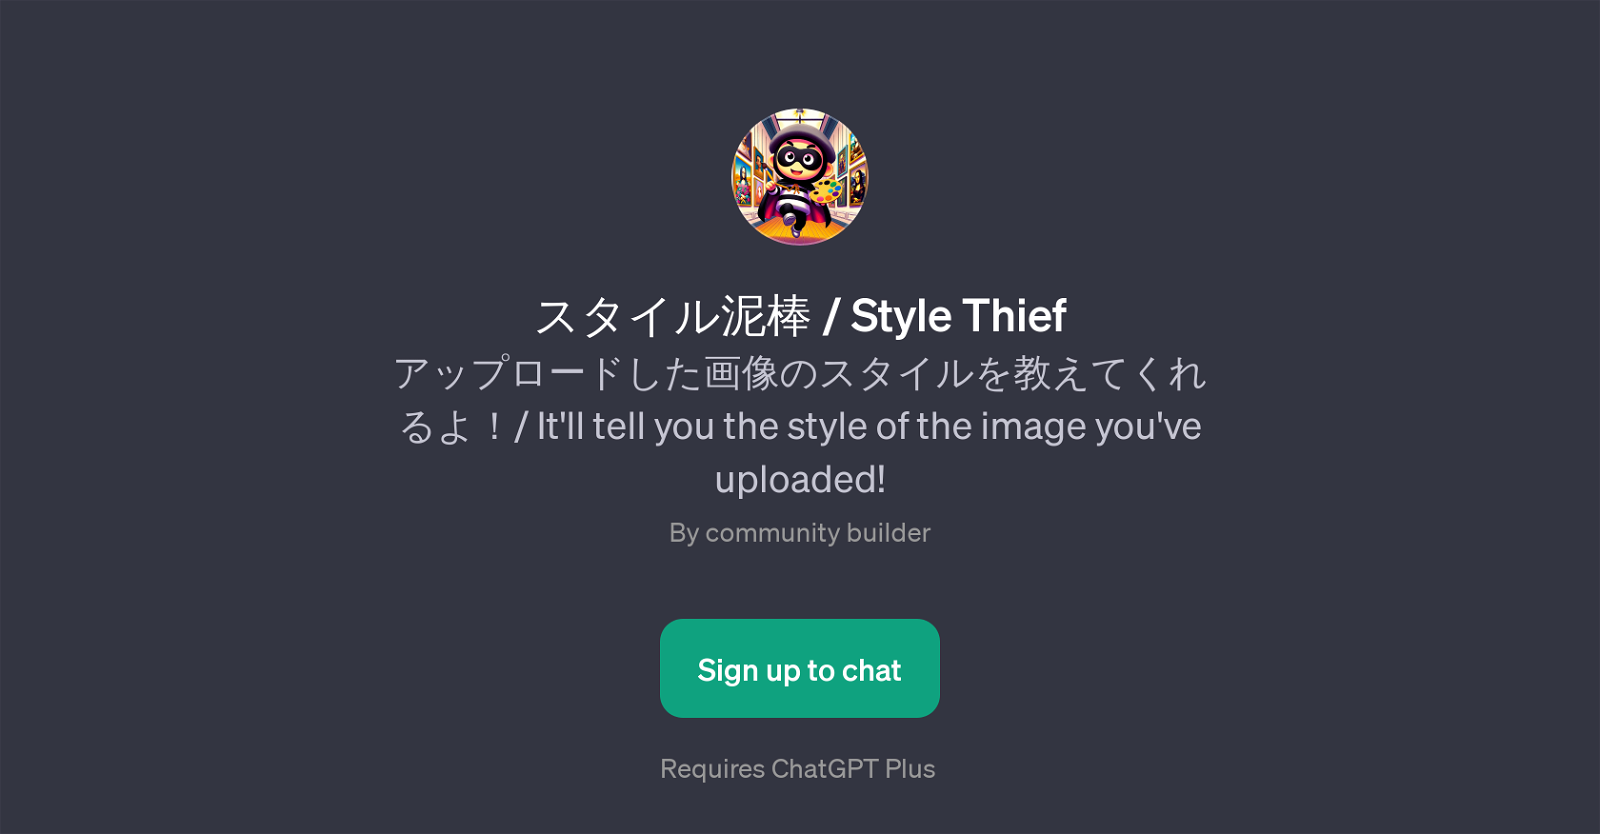 Style Thief website